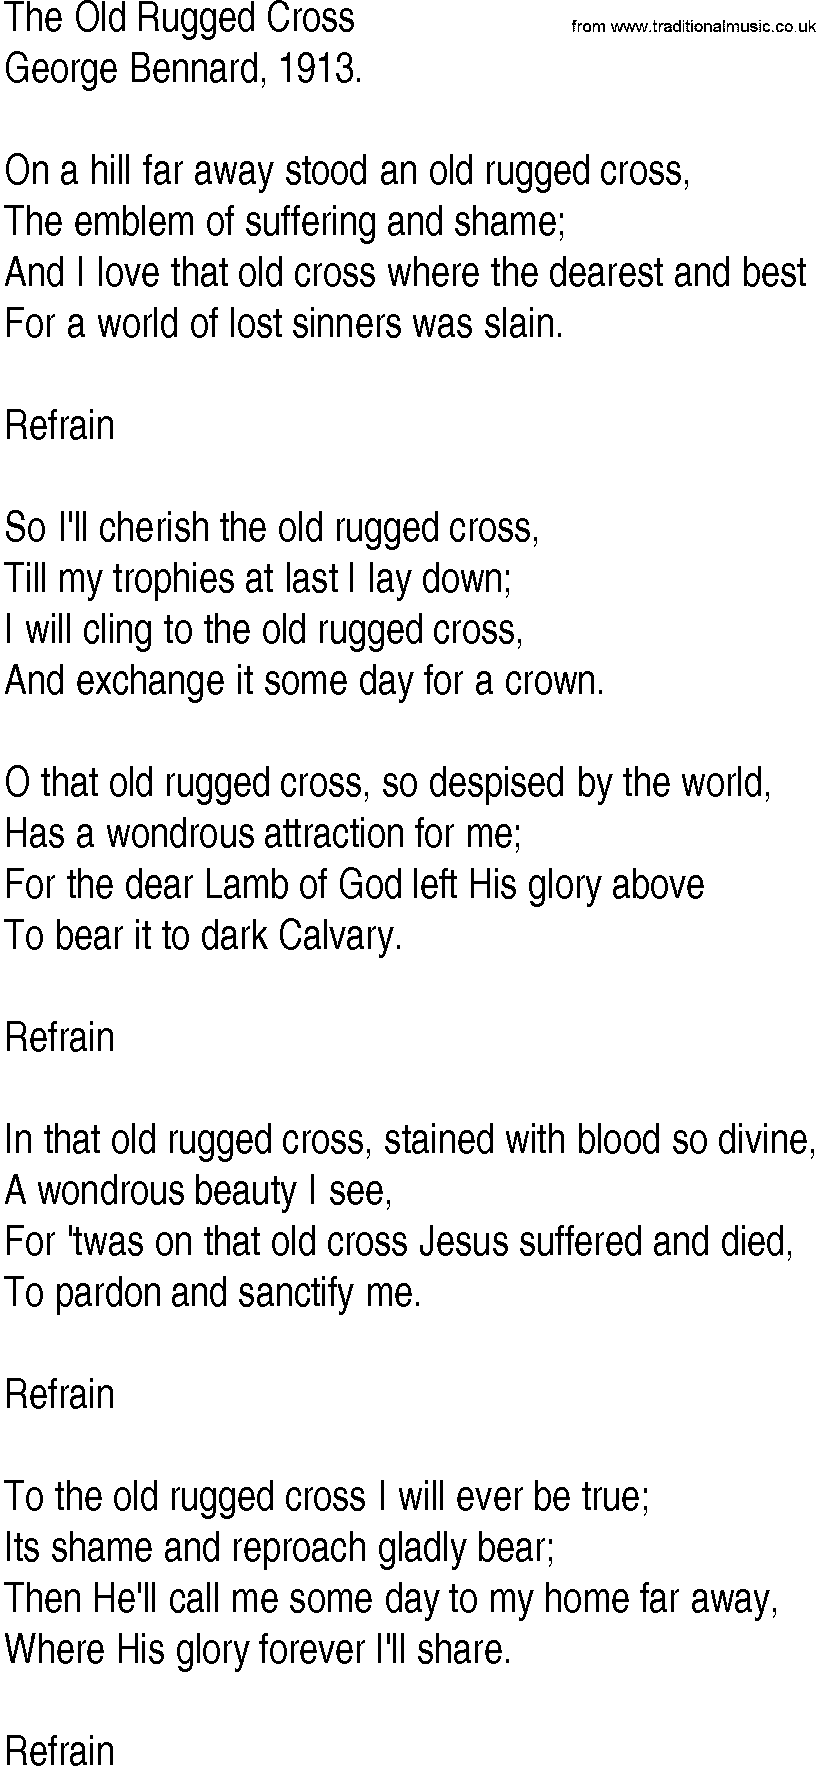 Hymn and Gospel Song: The Old Rugged Cross by George Bennard lyrics